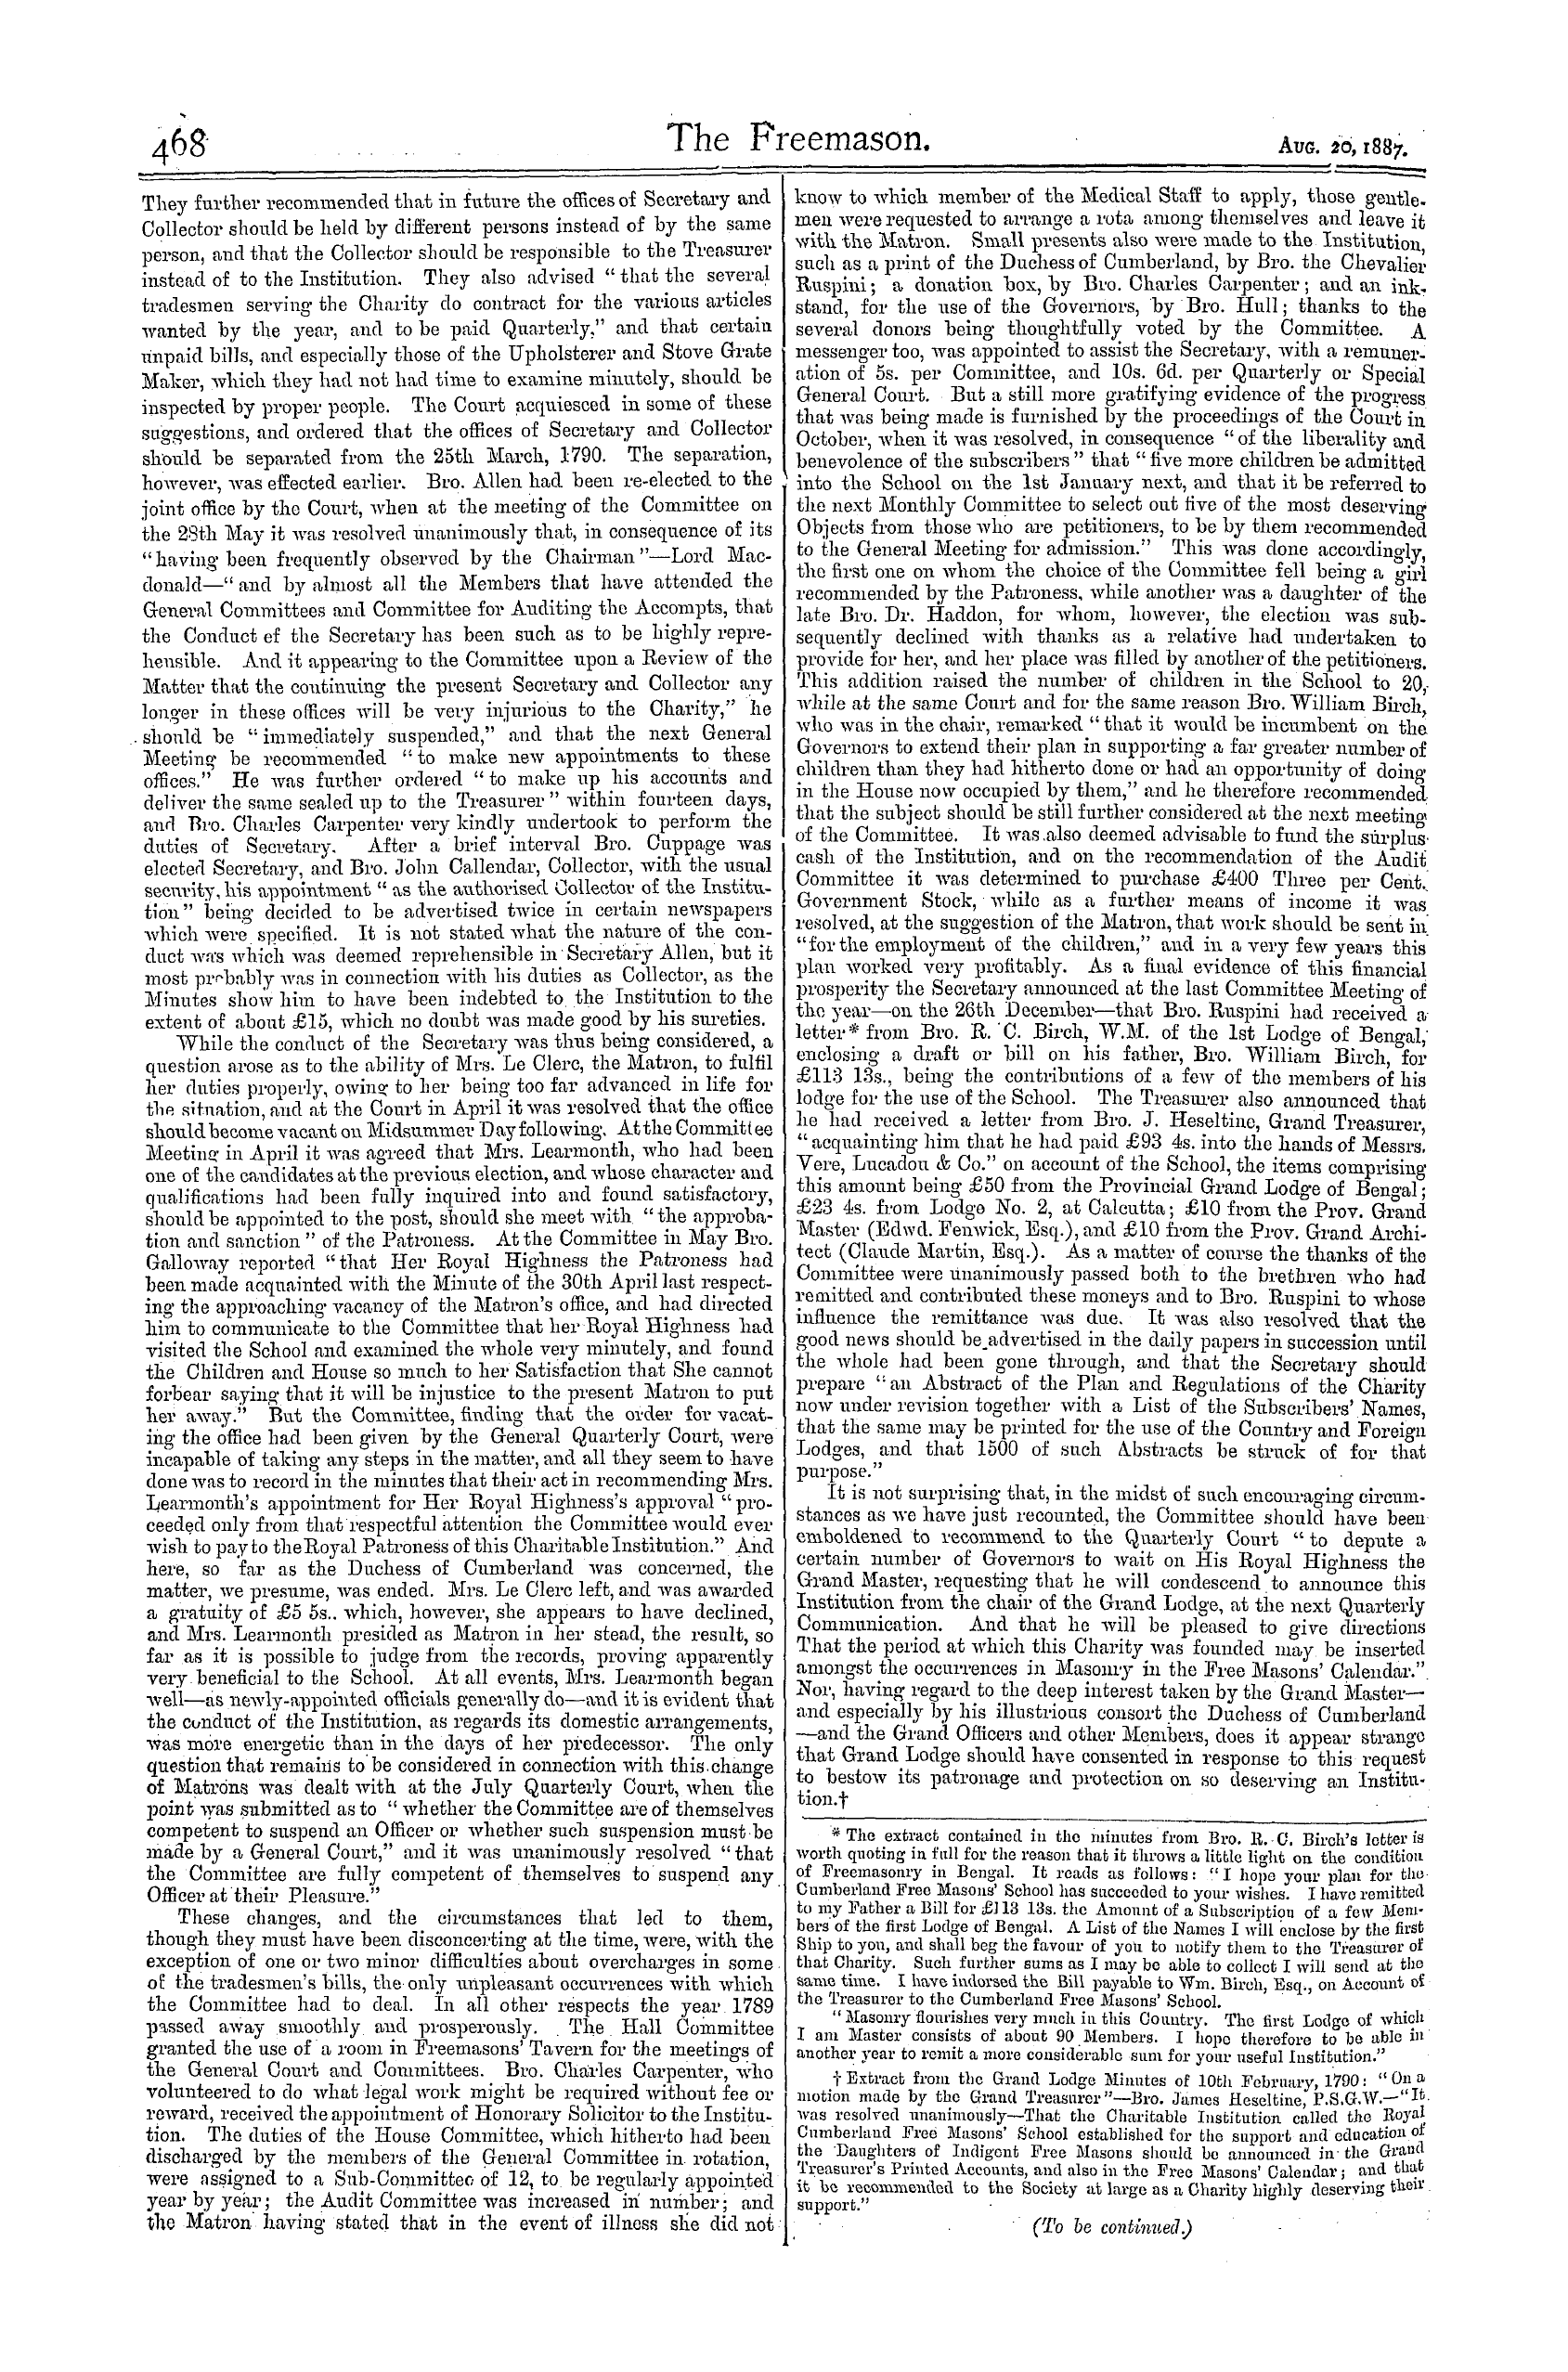 The Freemason: 1887-08-20: 6